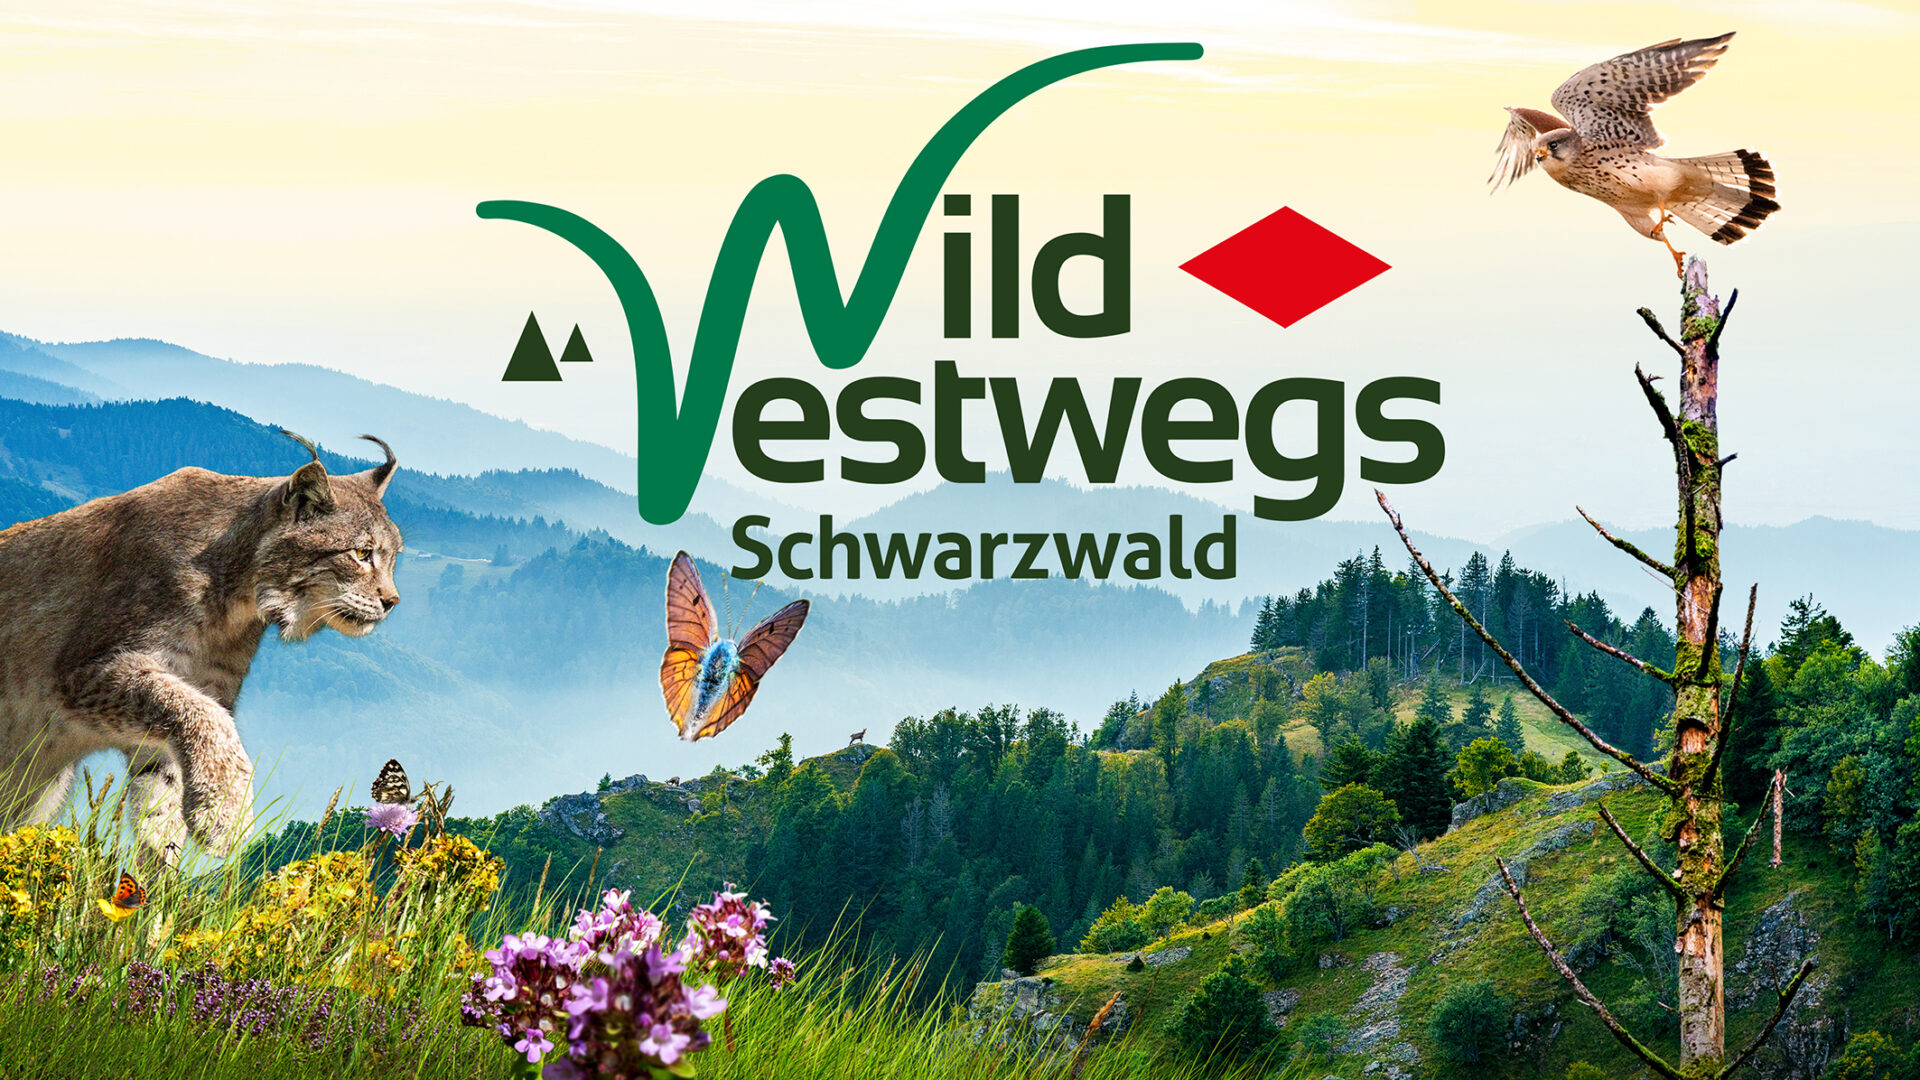 badenova Kino-Event WildWestwegs